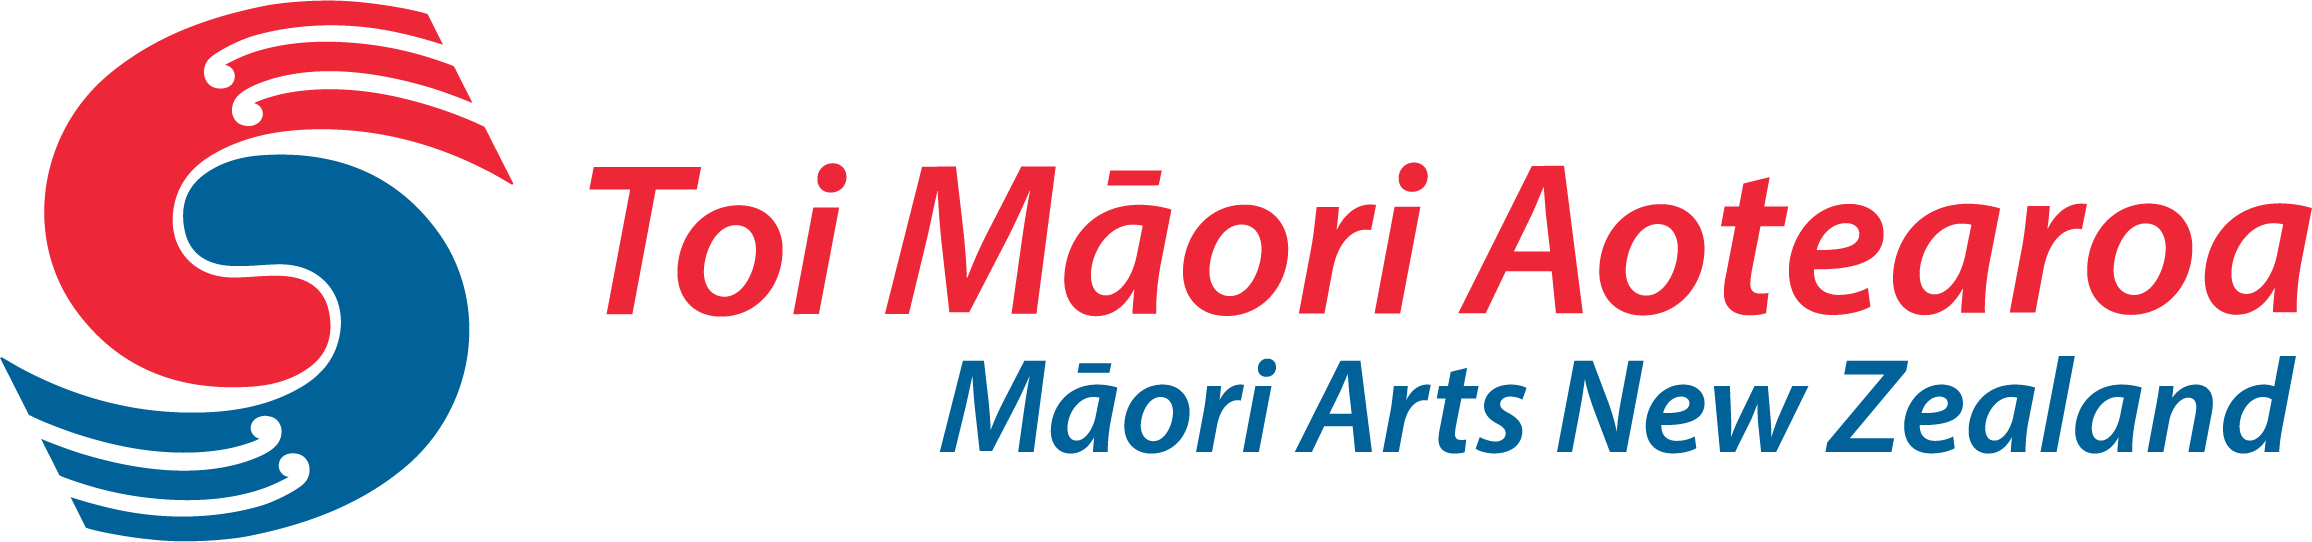 About Toi Maori Aotearoa Toi Maori Aotearoa Maori Arts New Zealand